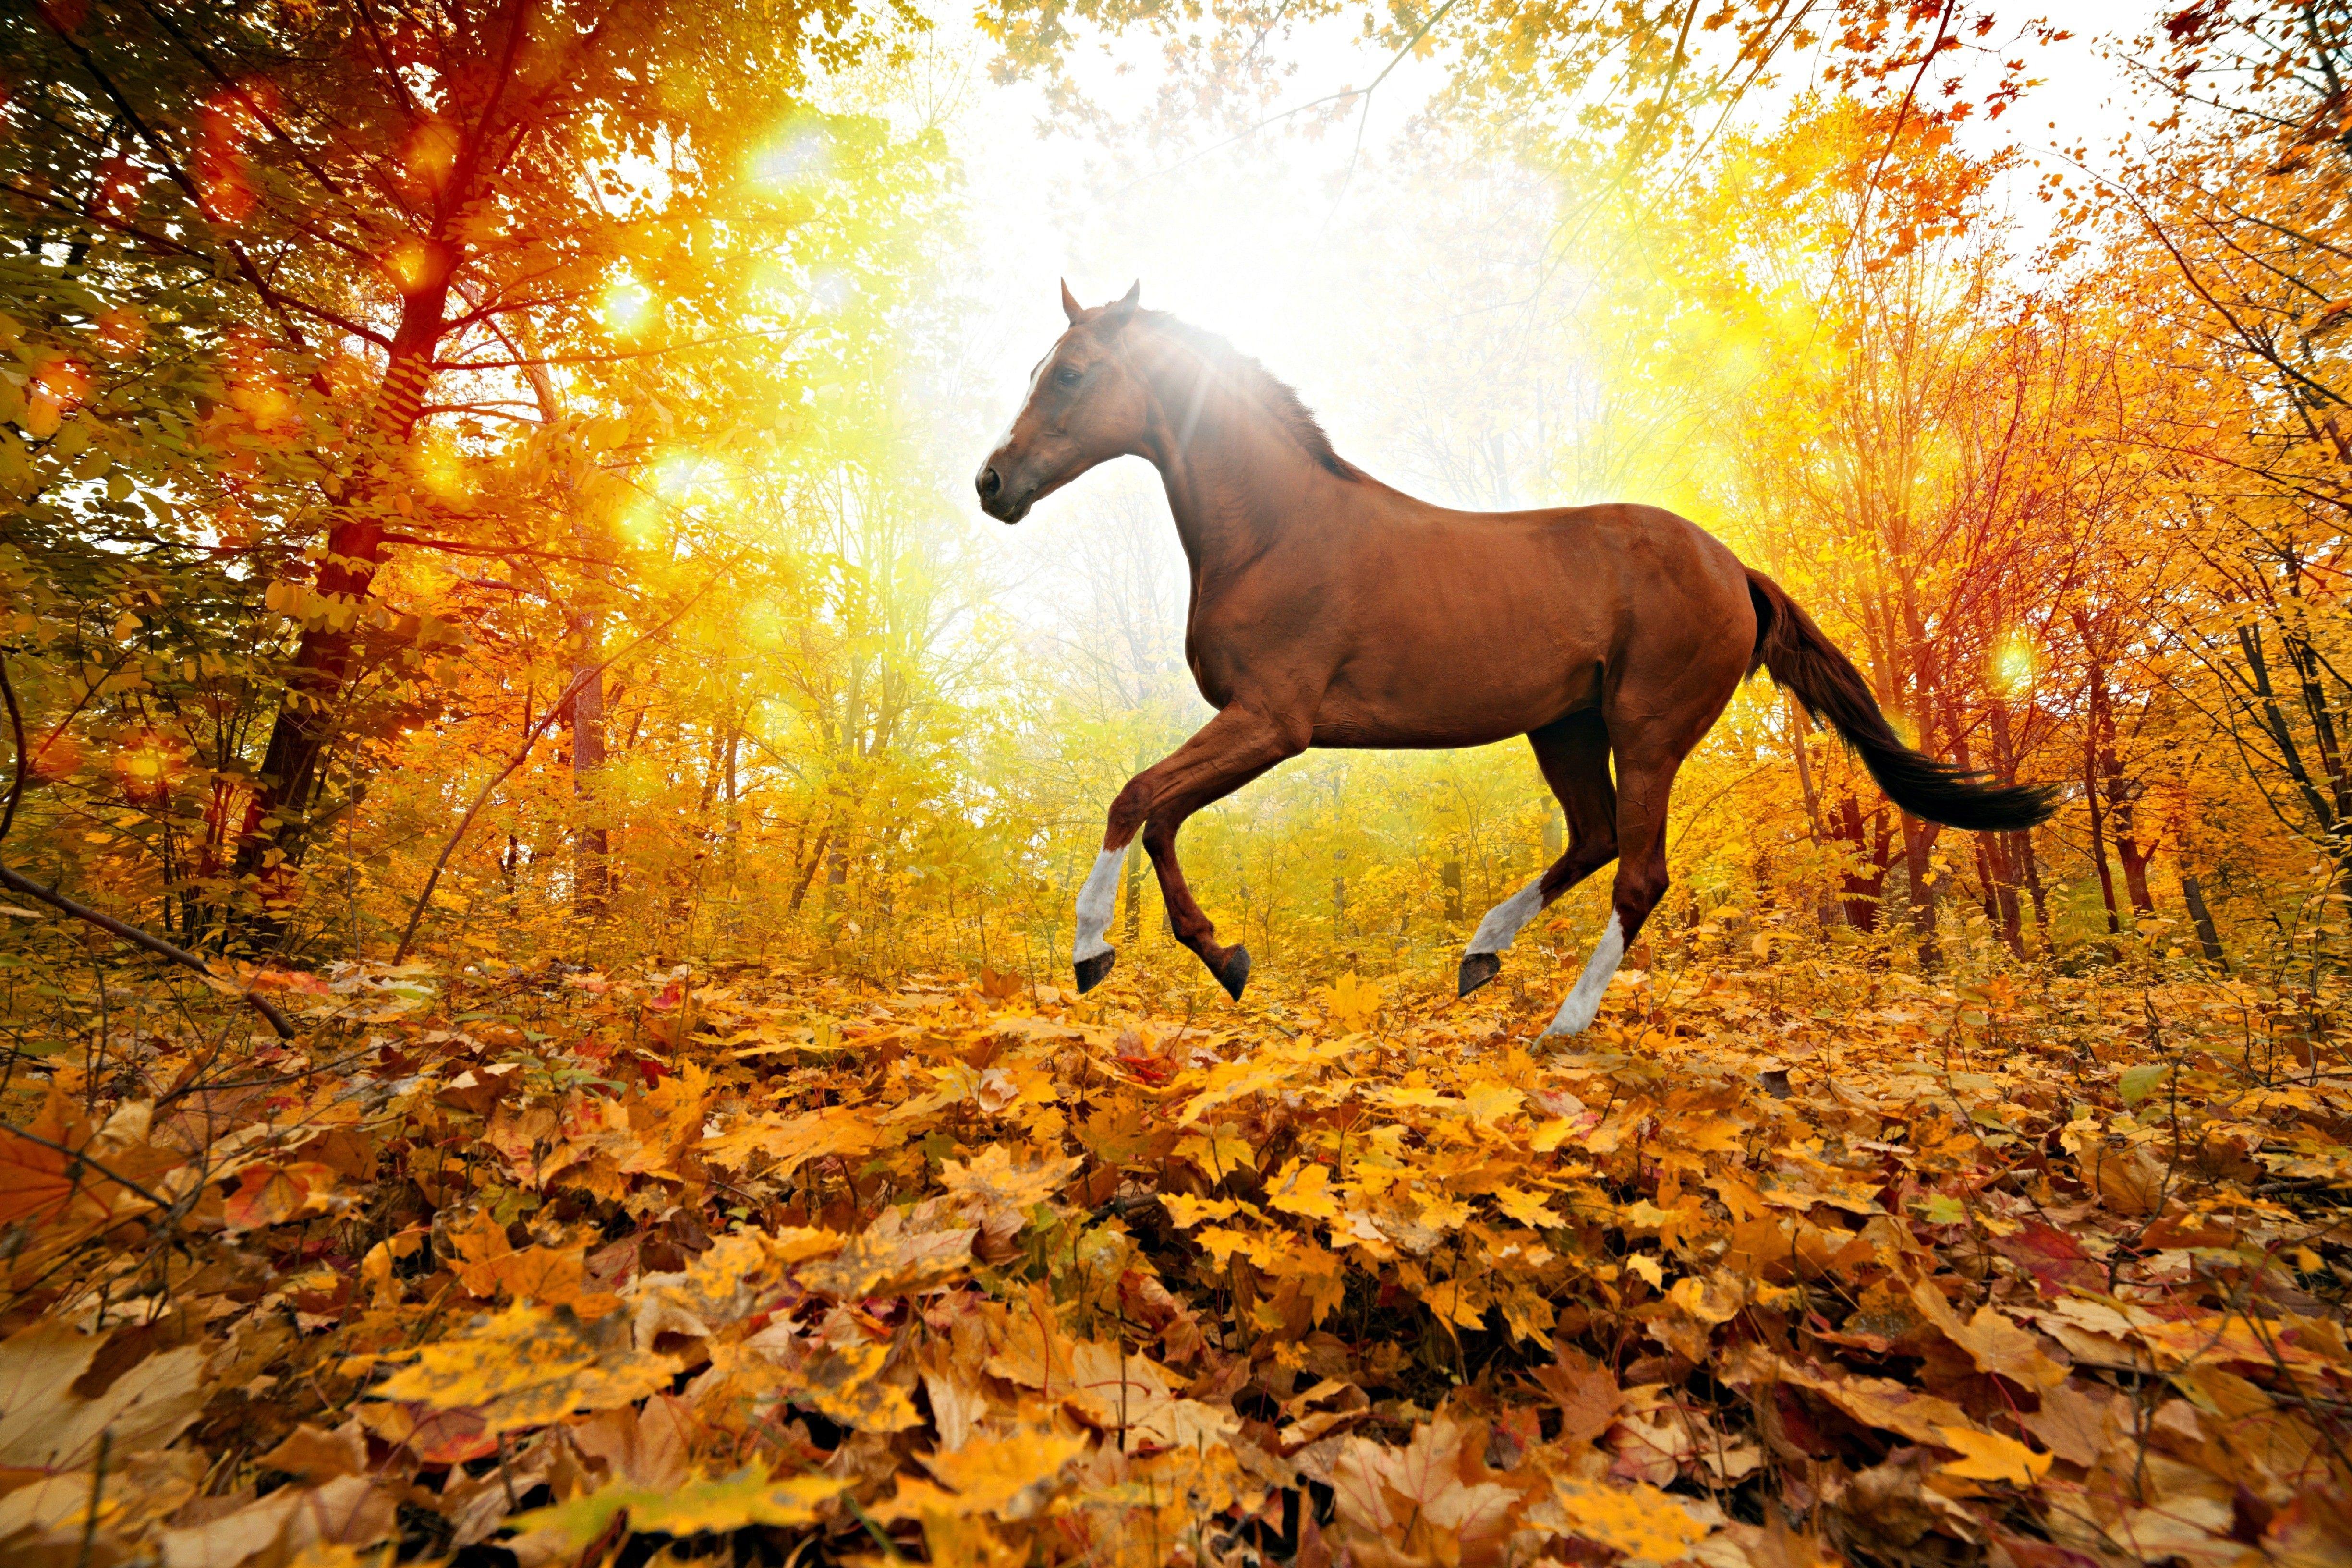 Horses: Light Autumn Sun Fall Trees Run Horse Leaves White Horses